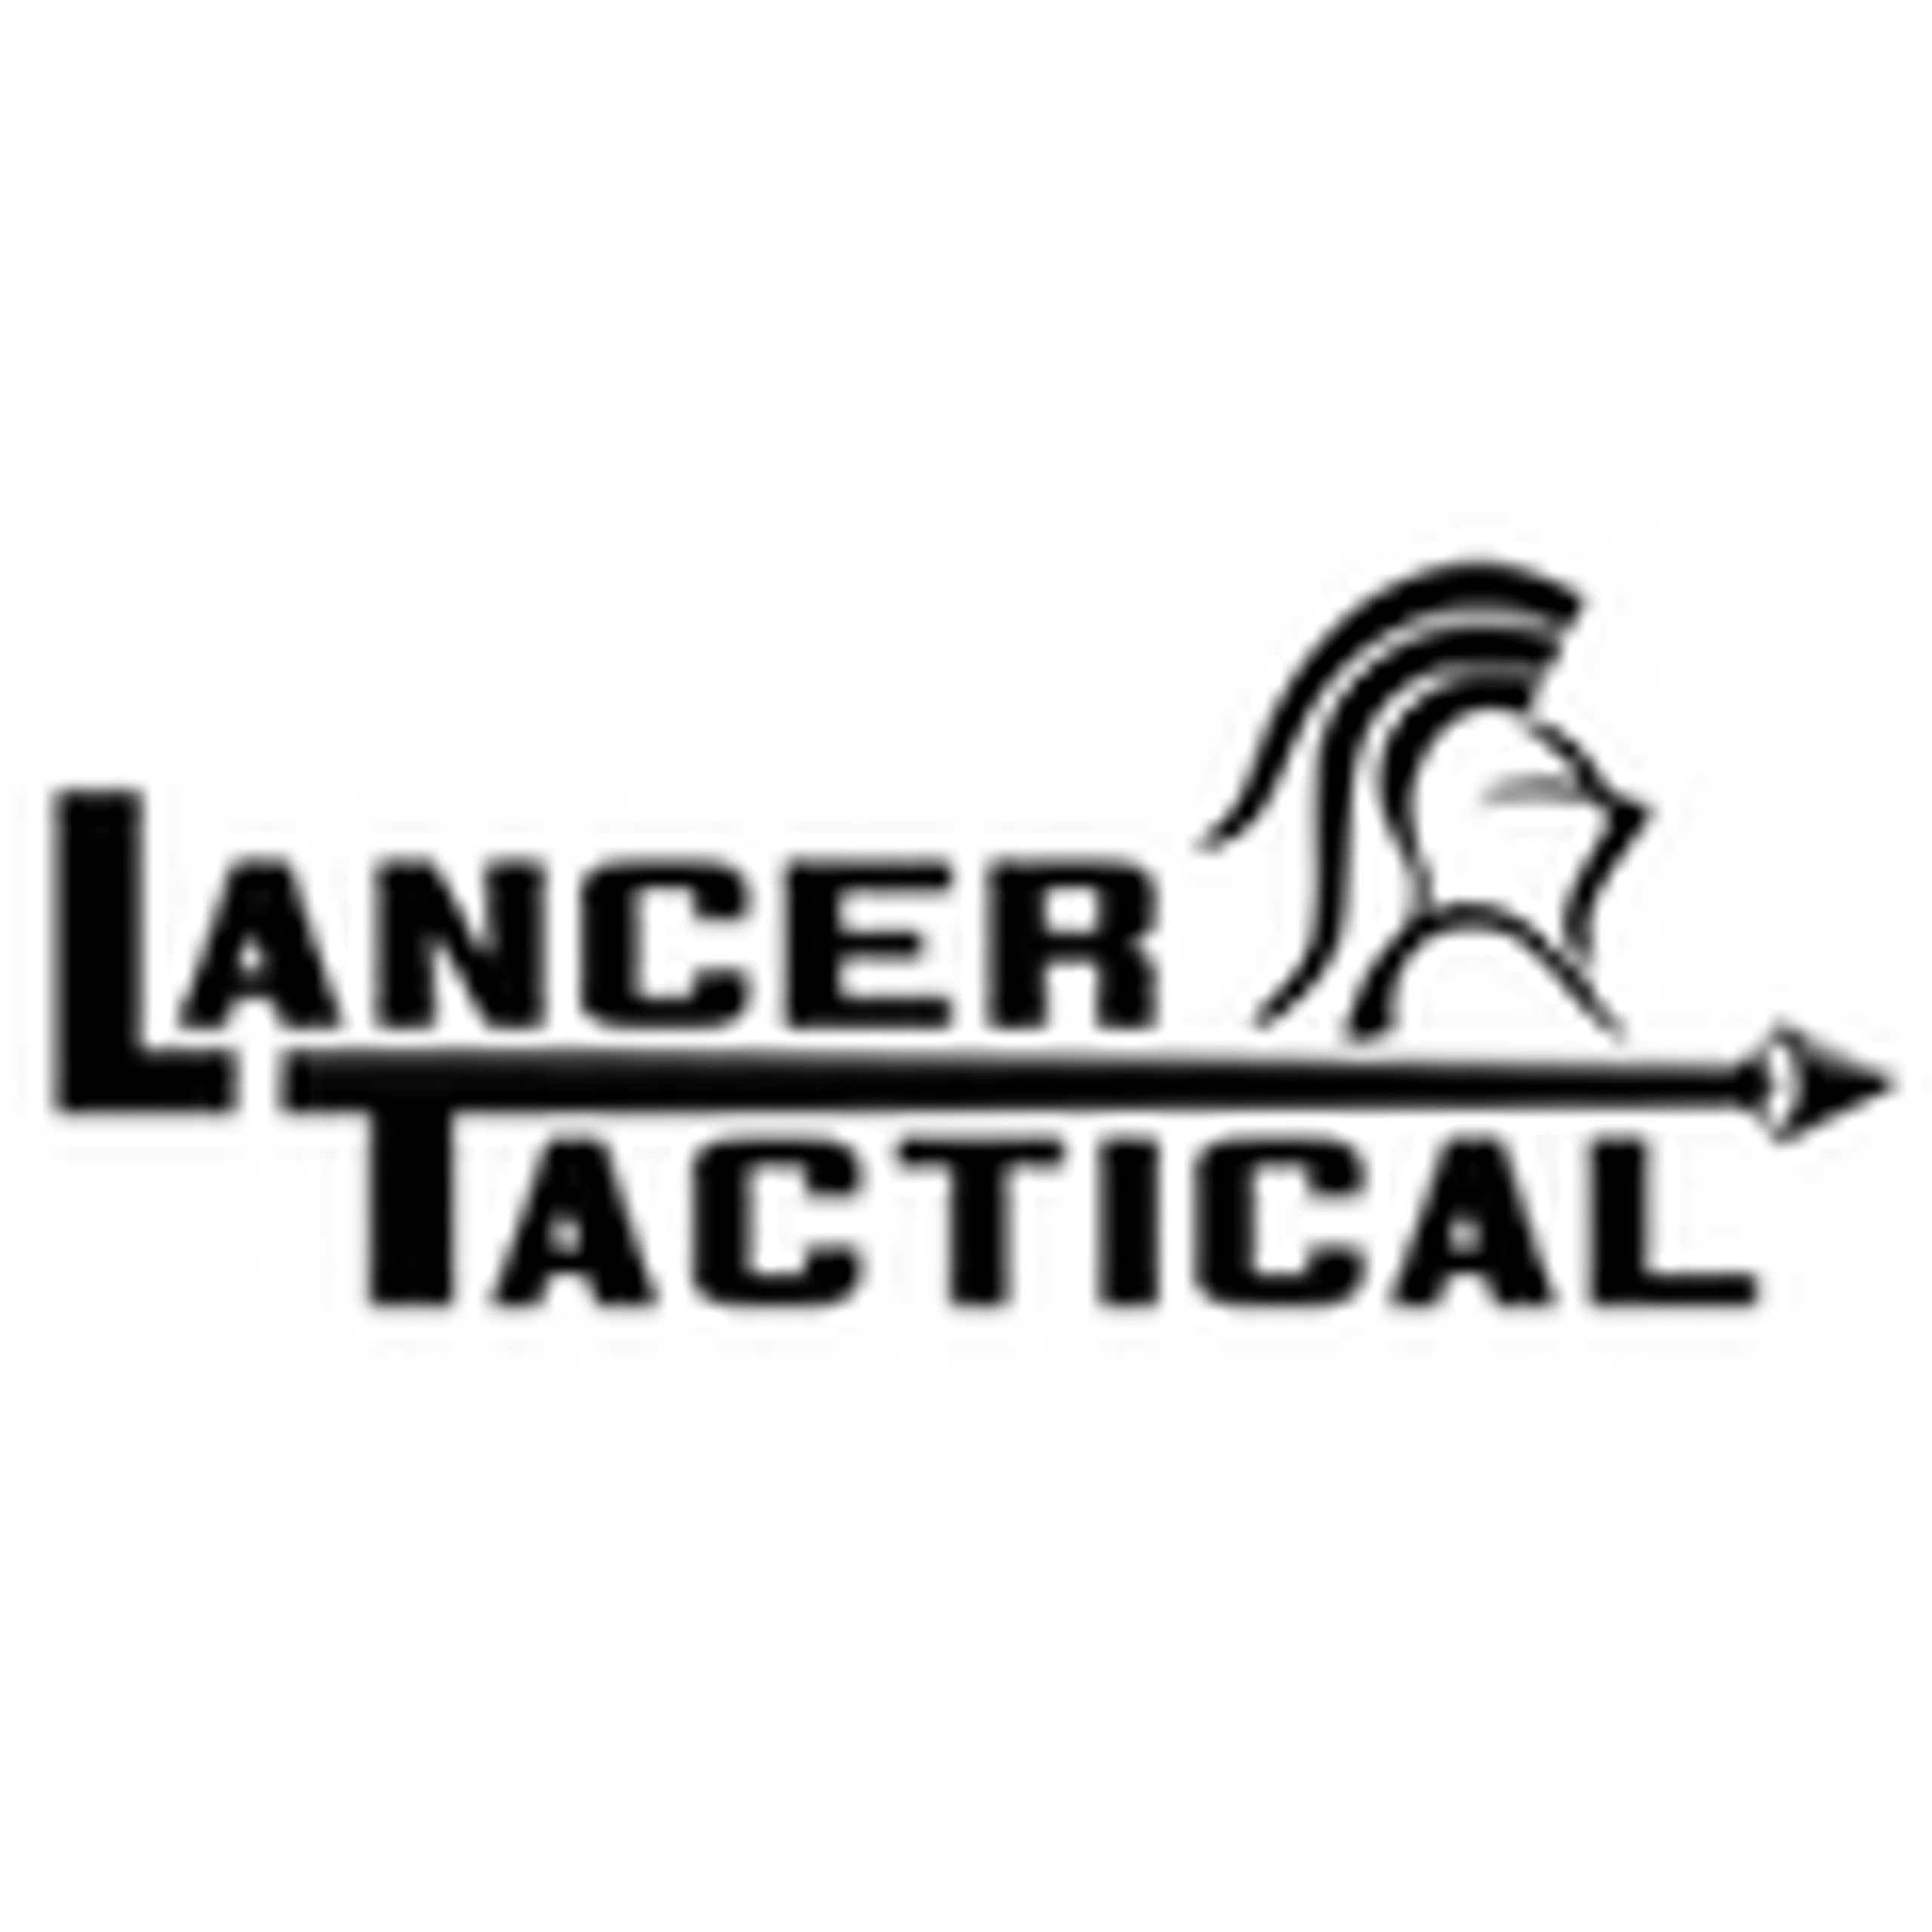 Lancer Tactical | Airsoft Guns, Accessories & Tactical Gear